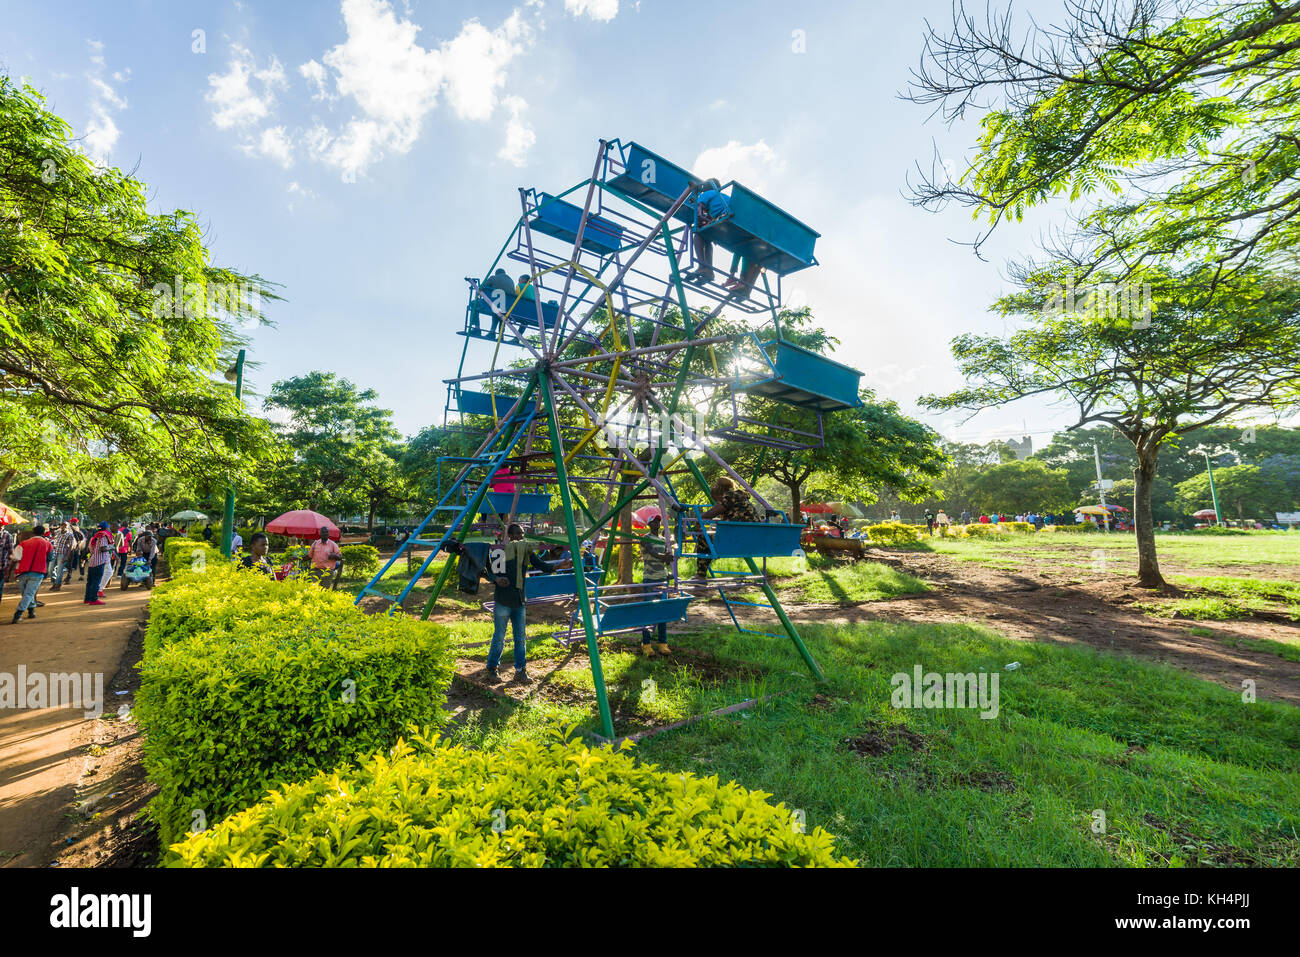 Fairground amusement rides with children on in Uhuru Park, Nairobi, Kenya Stock Photo